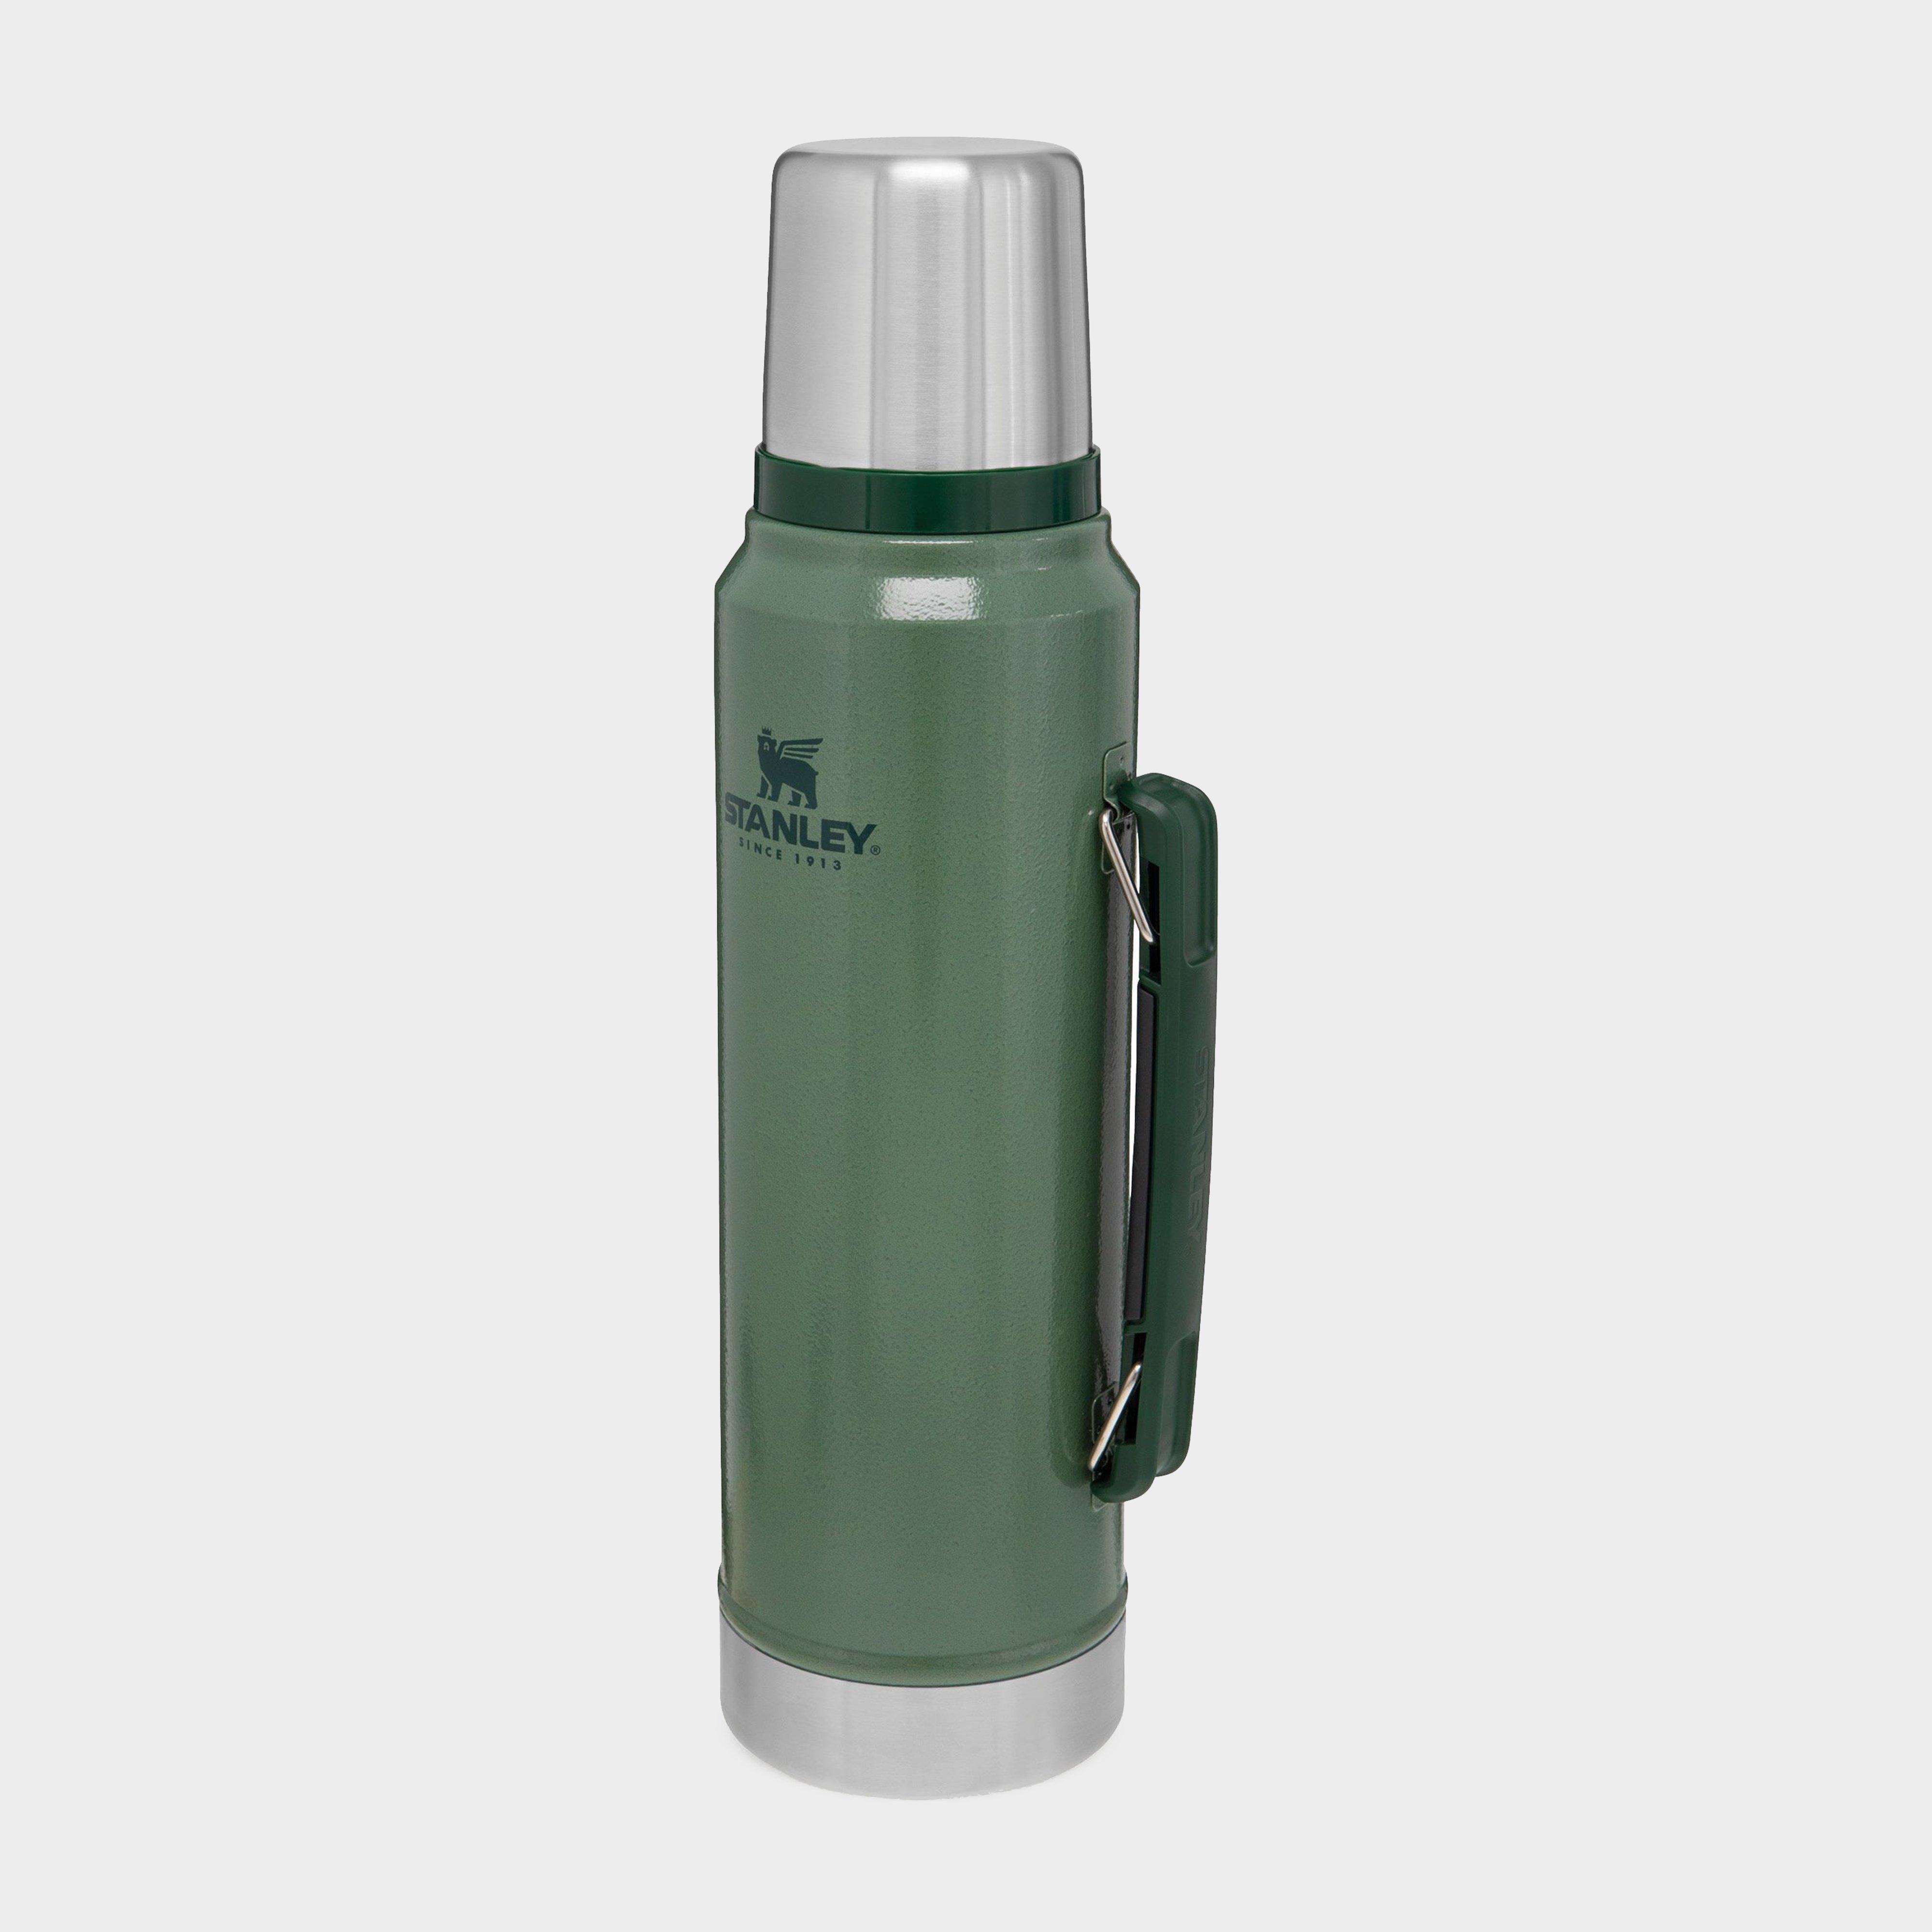  Stanley Classic Vacuum Bottle 1.0L, Green